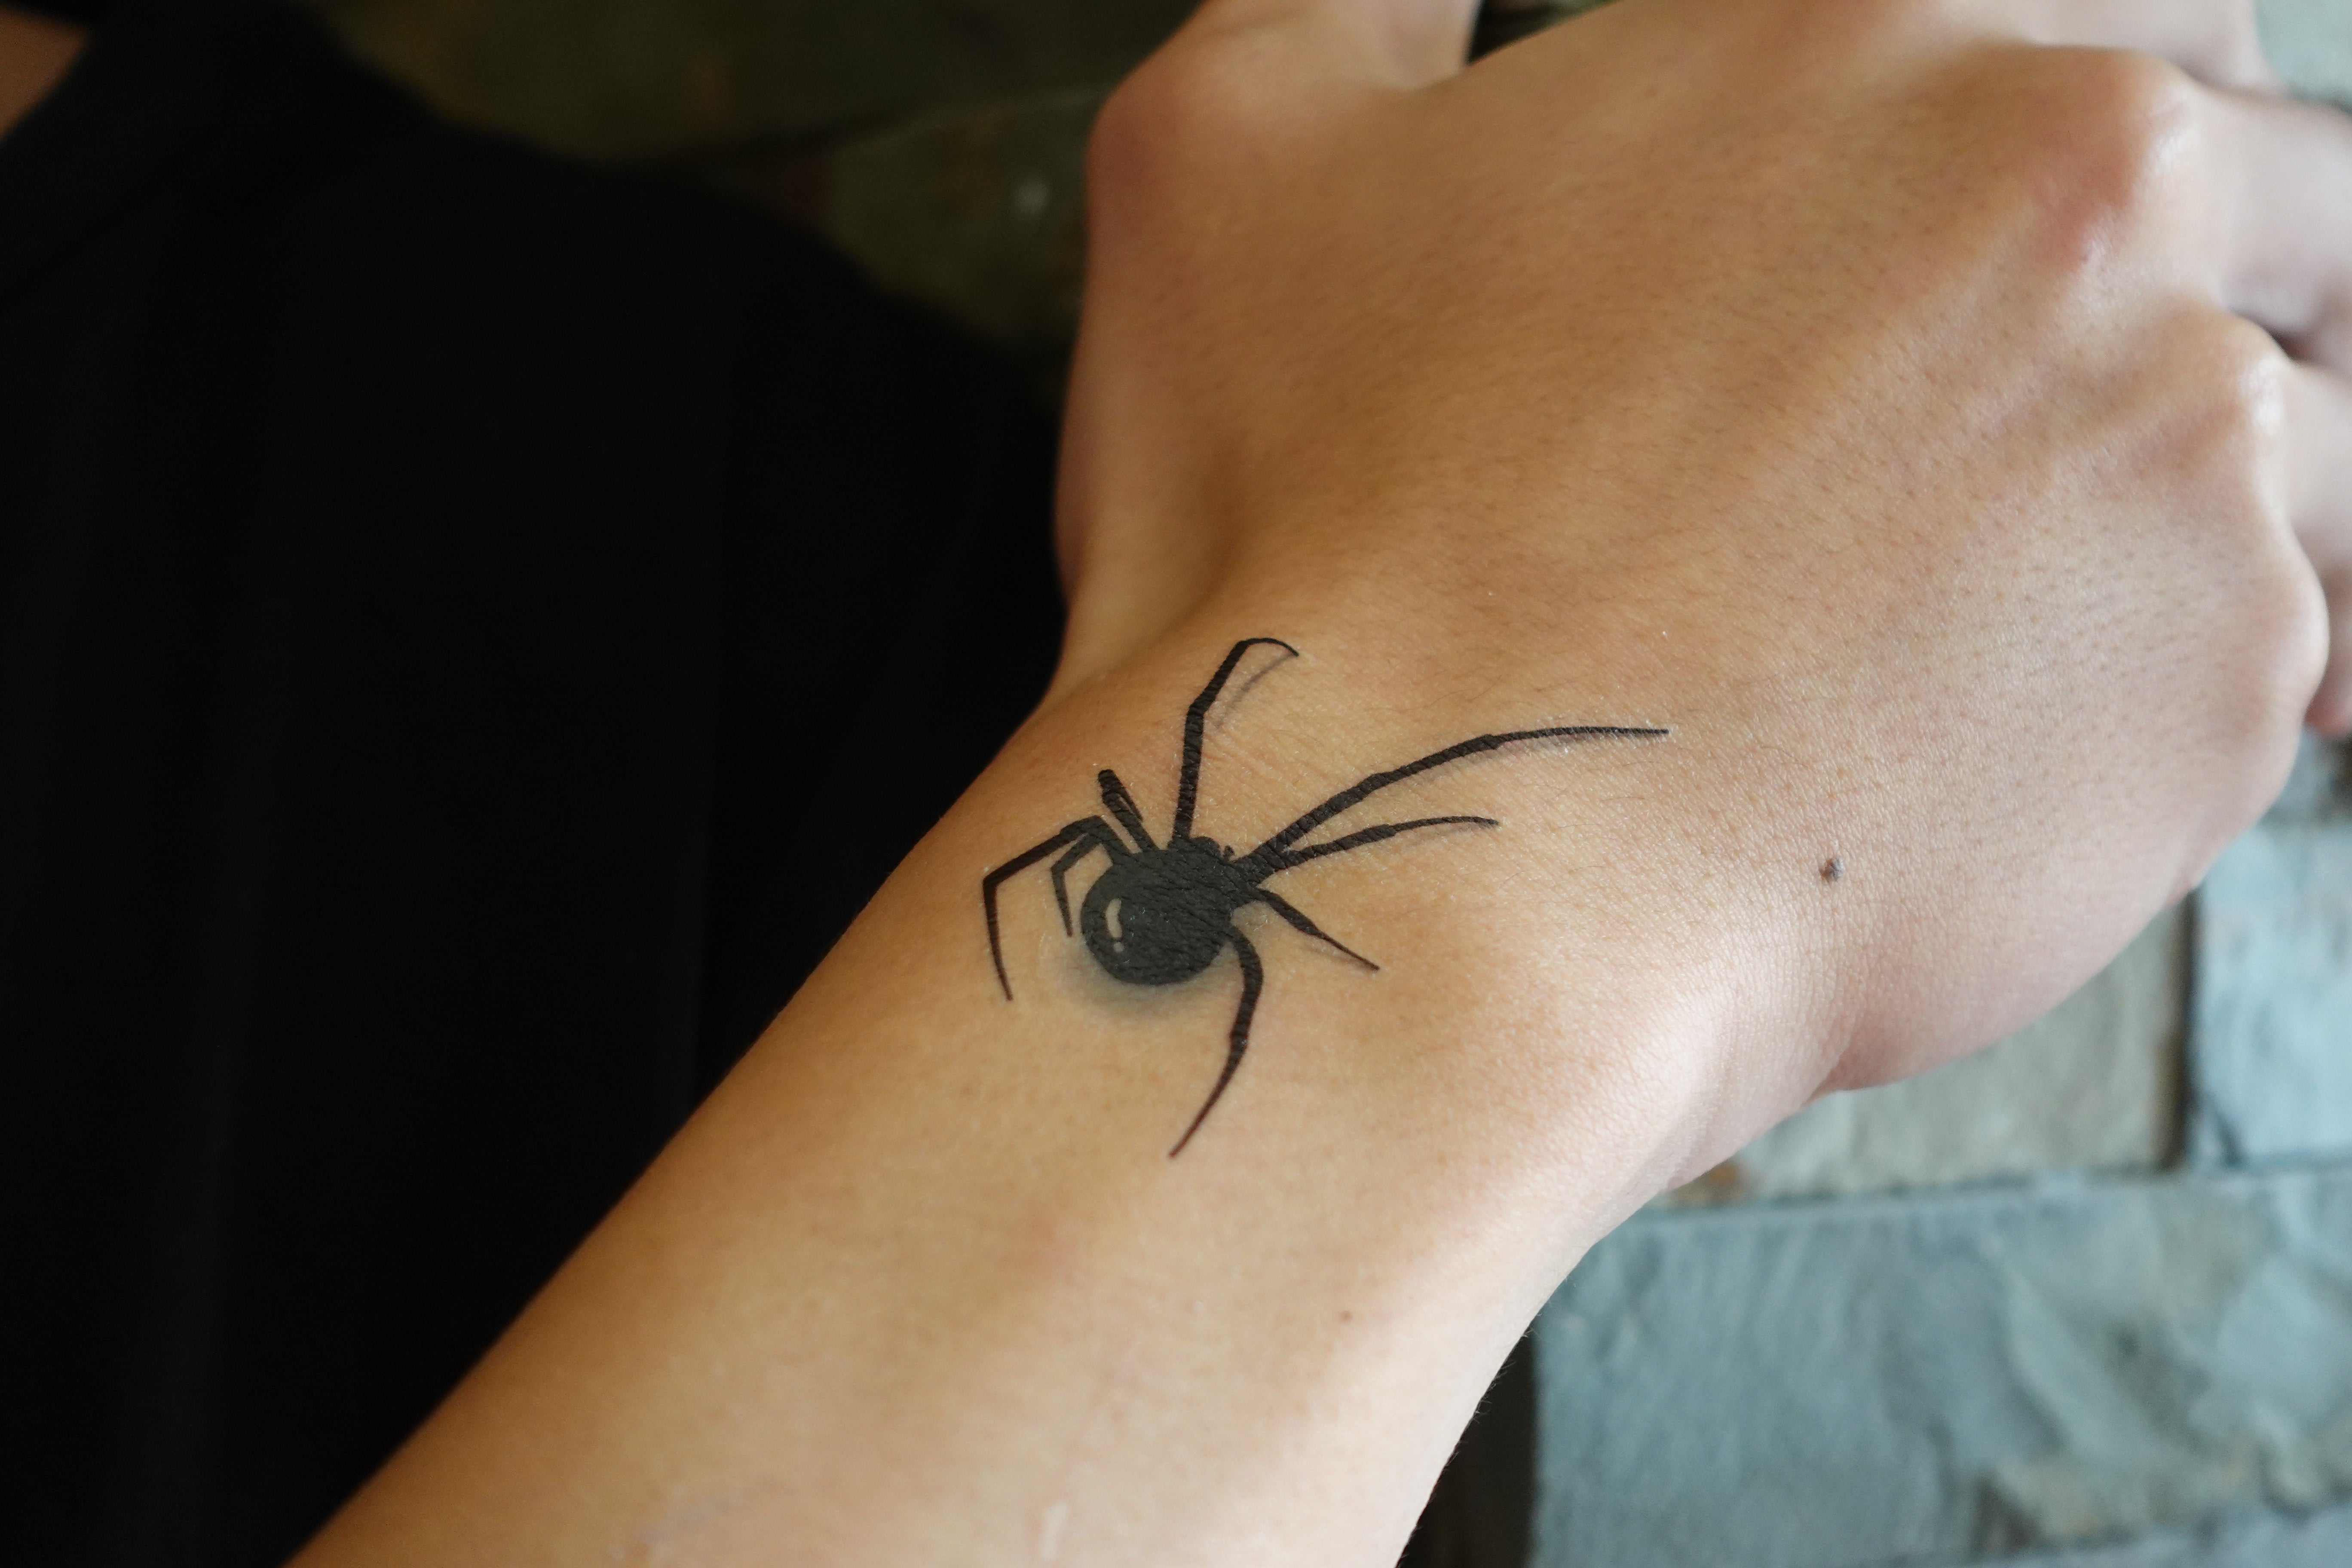 Daddy Jacks Body Art Studio : Tattoos : Realistic : Spider